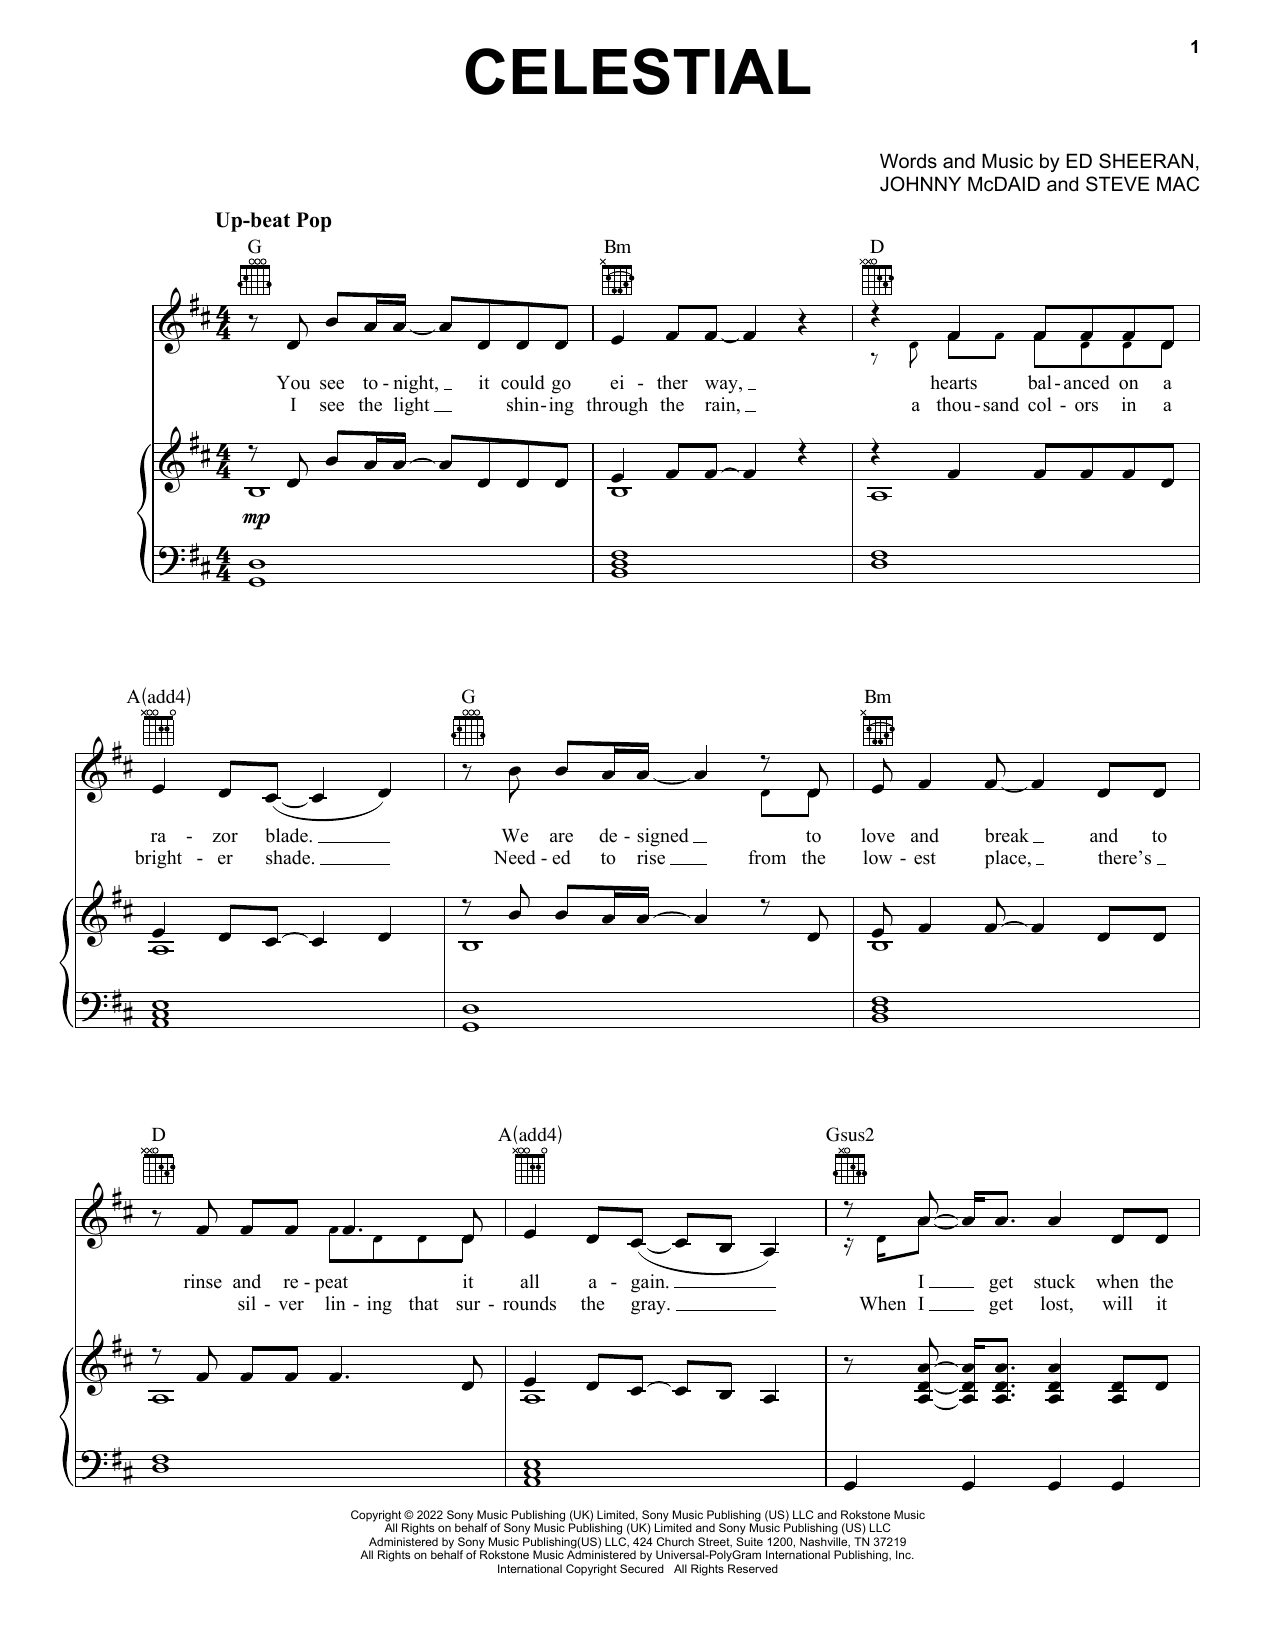 Ed Sheeran Celestial Sheet Music Notes & Chords for Easy Guitar Tab - Download or Print PDF